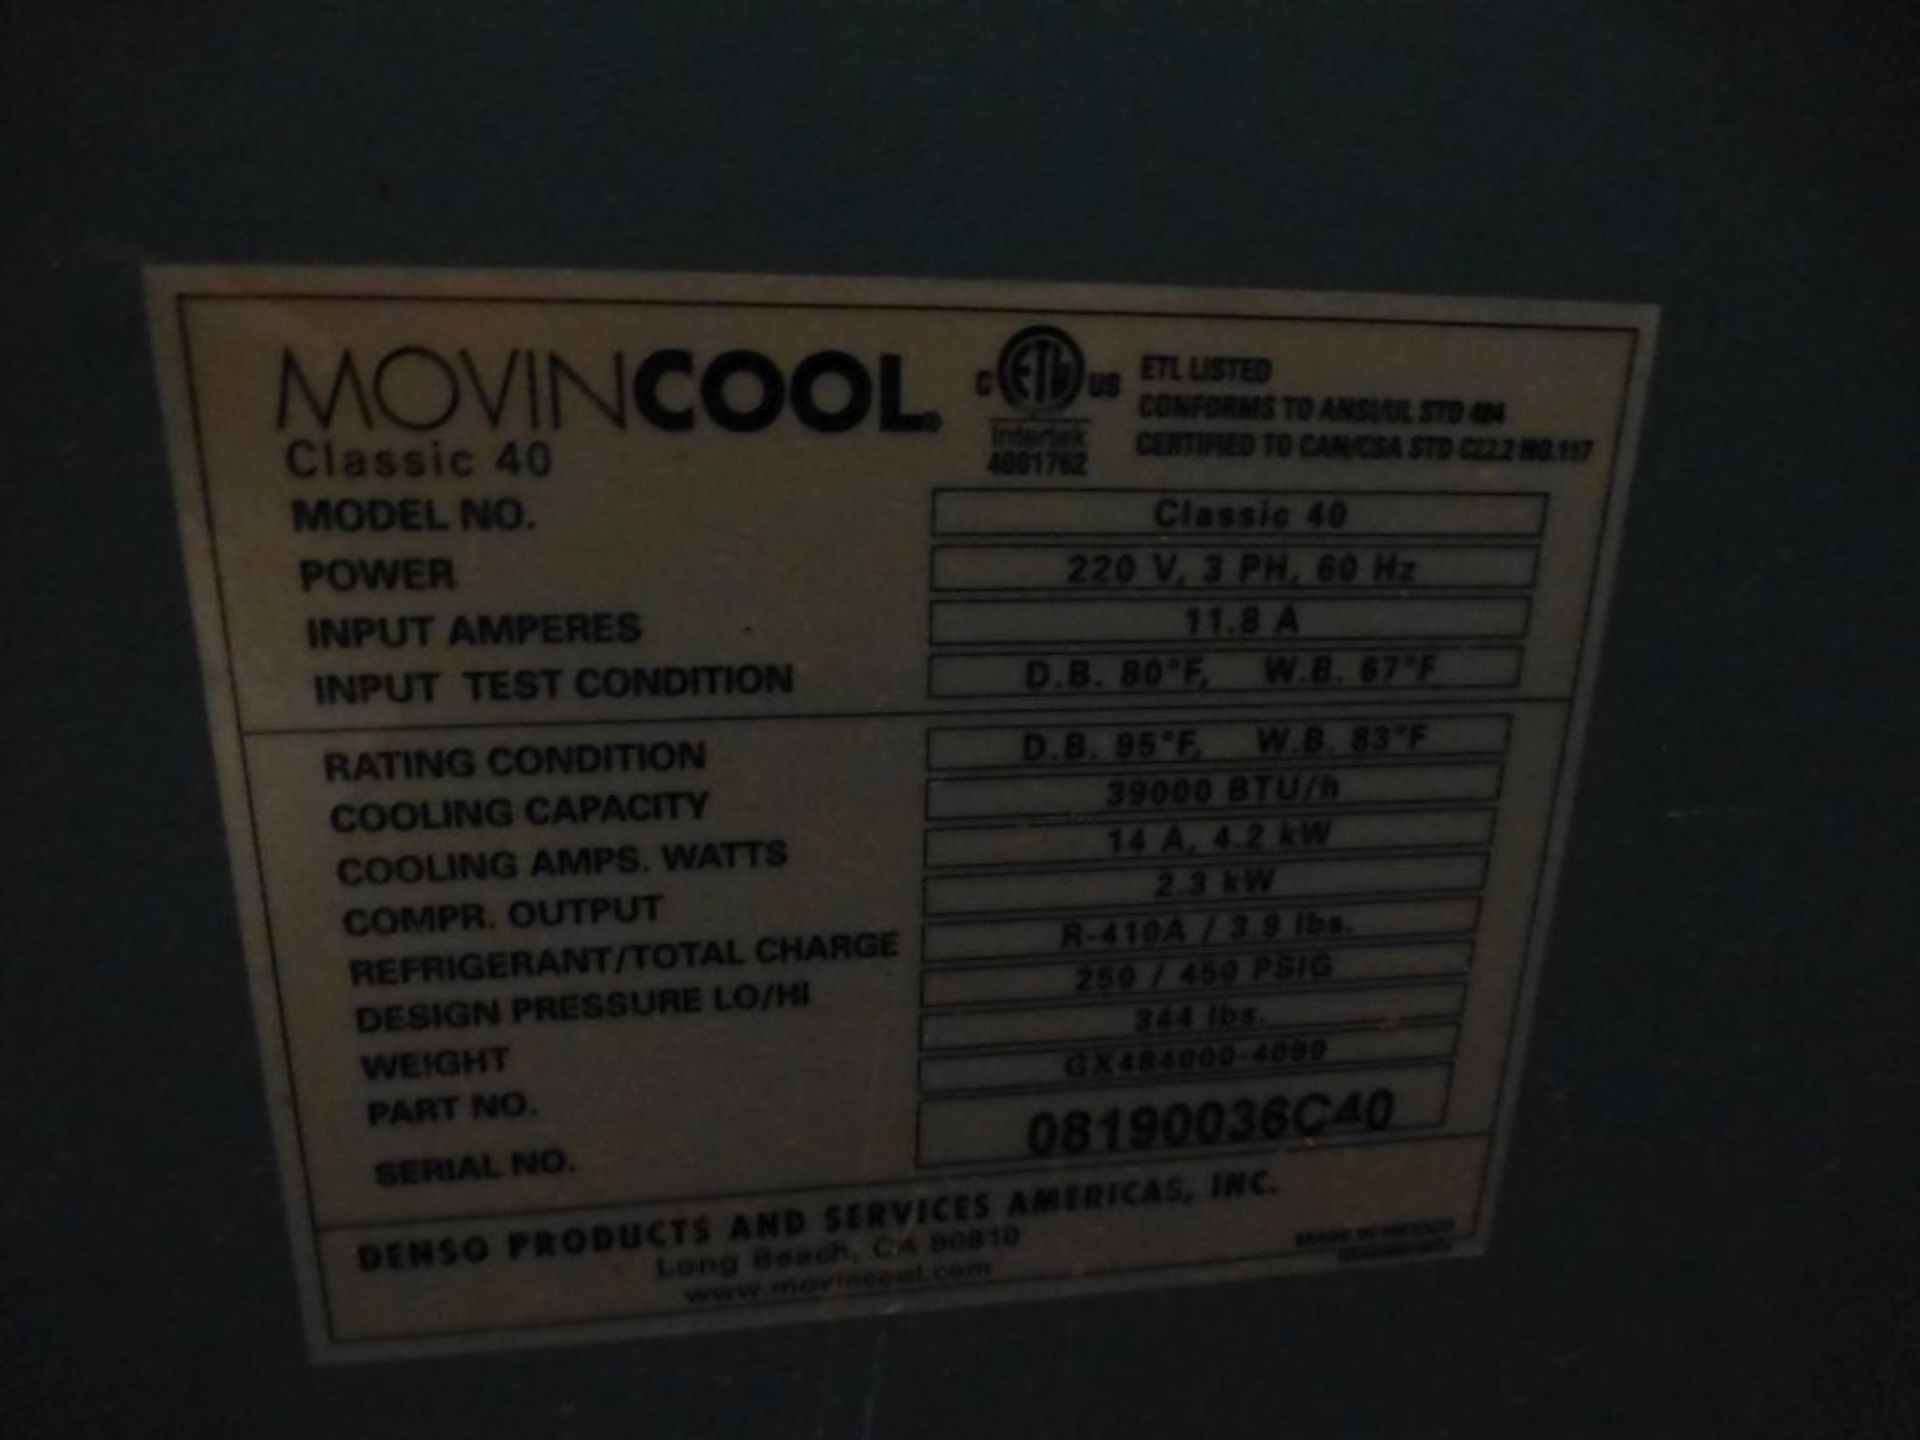 Movincool Classic 40 Air Conditioner|Model No. B29975; 220V; 3PH; Tag: 225194 - Image 5 of 5